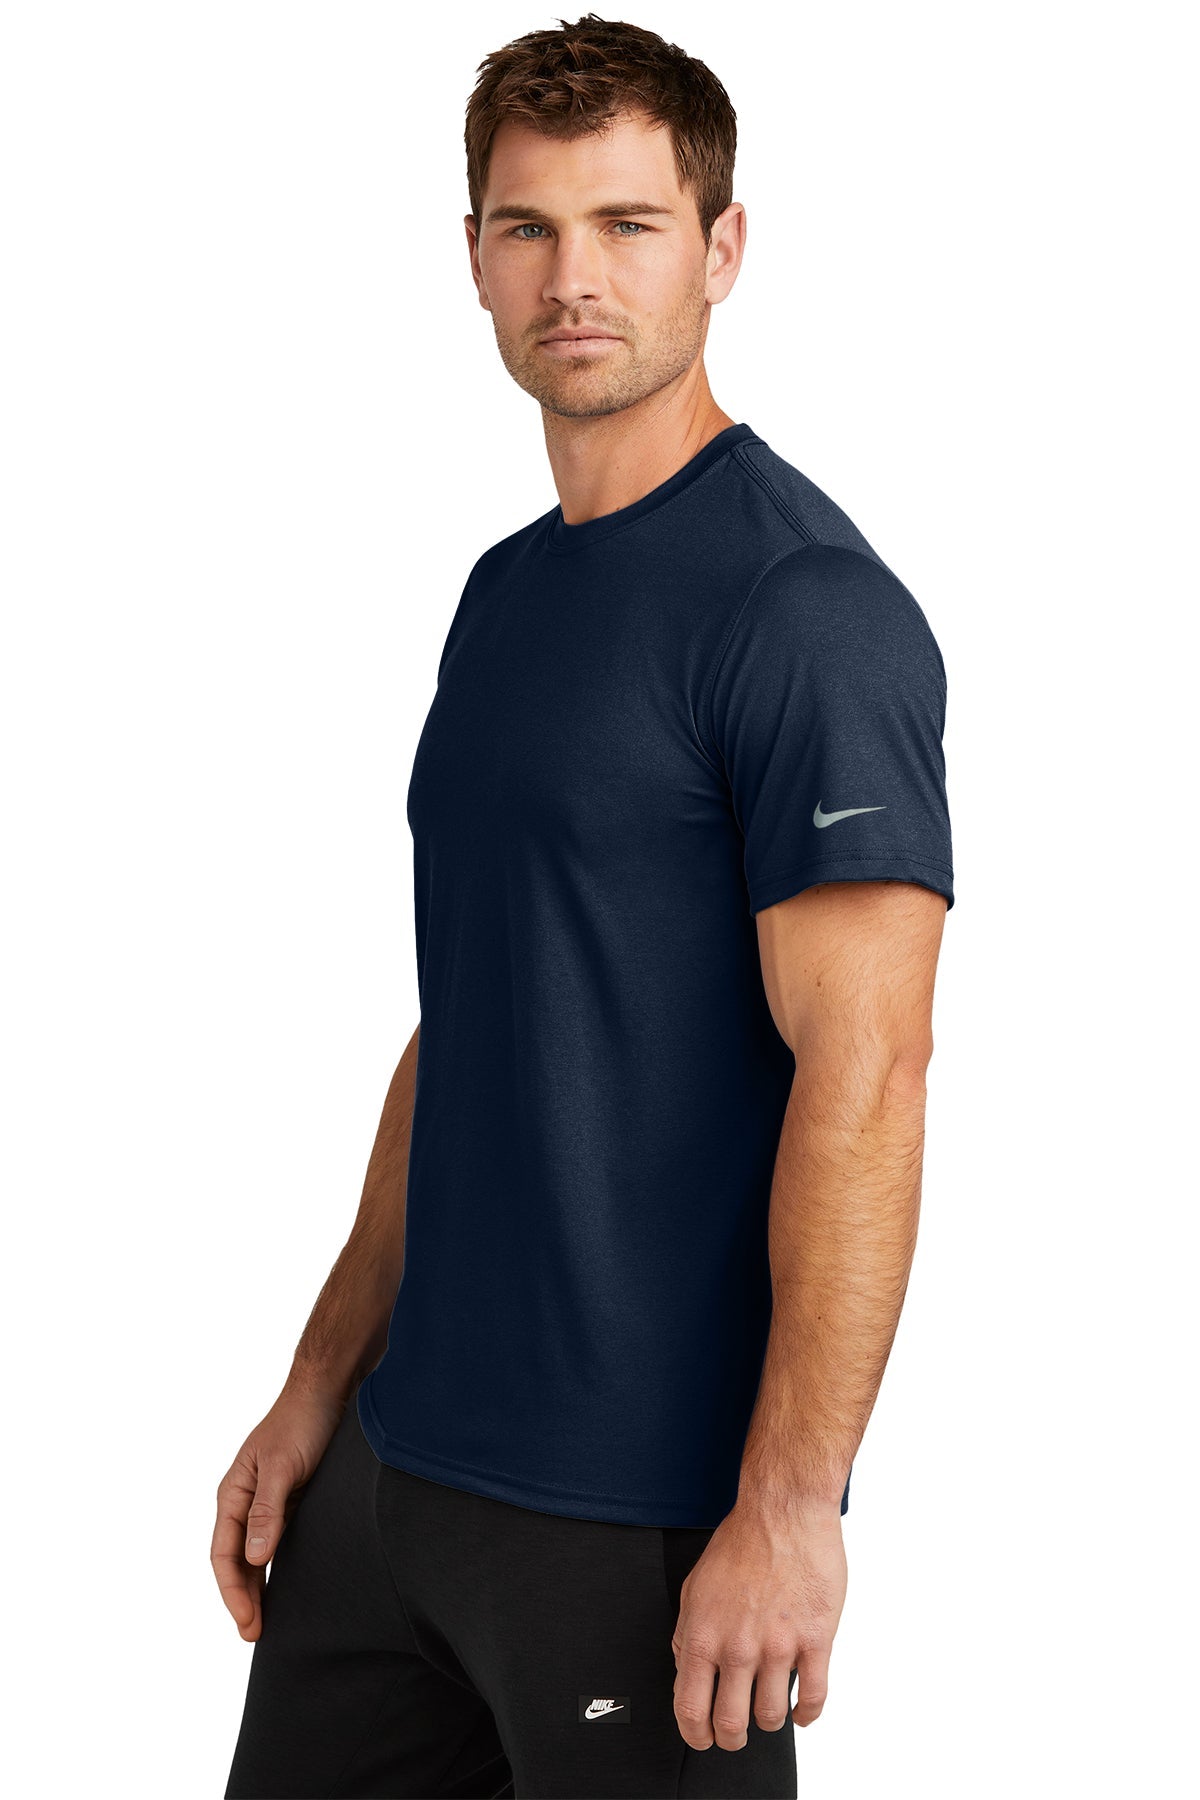 Nike Swoosh Sleeve rLegend Customized Tee's, College Navy